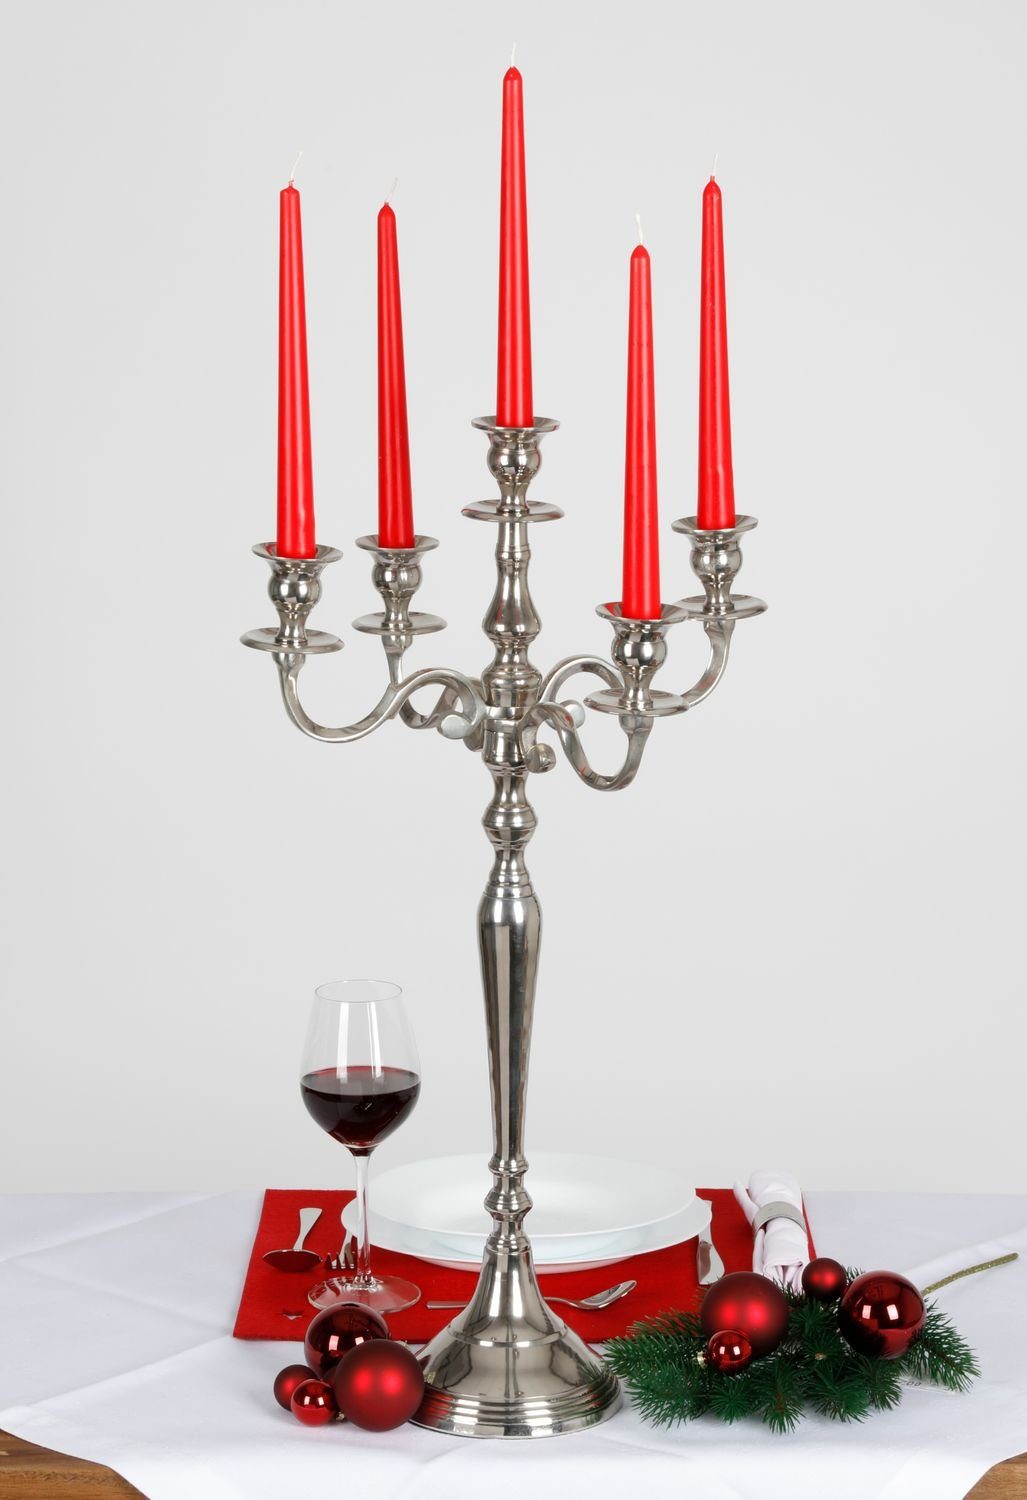 5-armig Kerzenständer 63cm Stand 2x Kerzenhalter Halter BURI Kerzenständer Kerzen Ständer